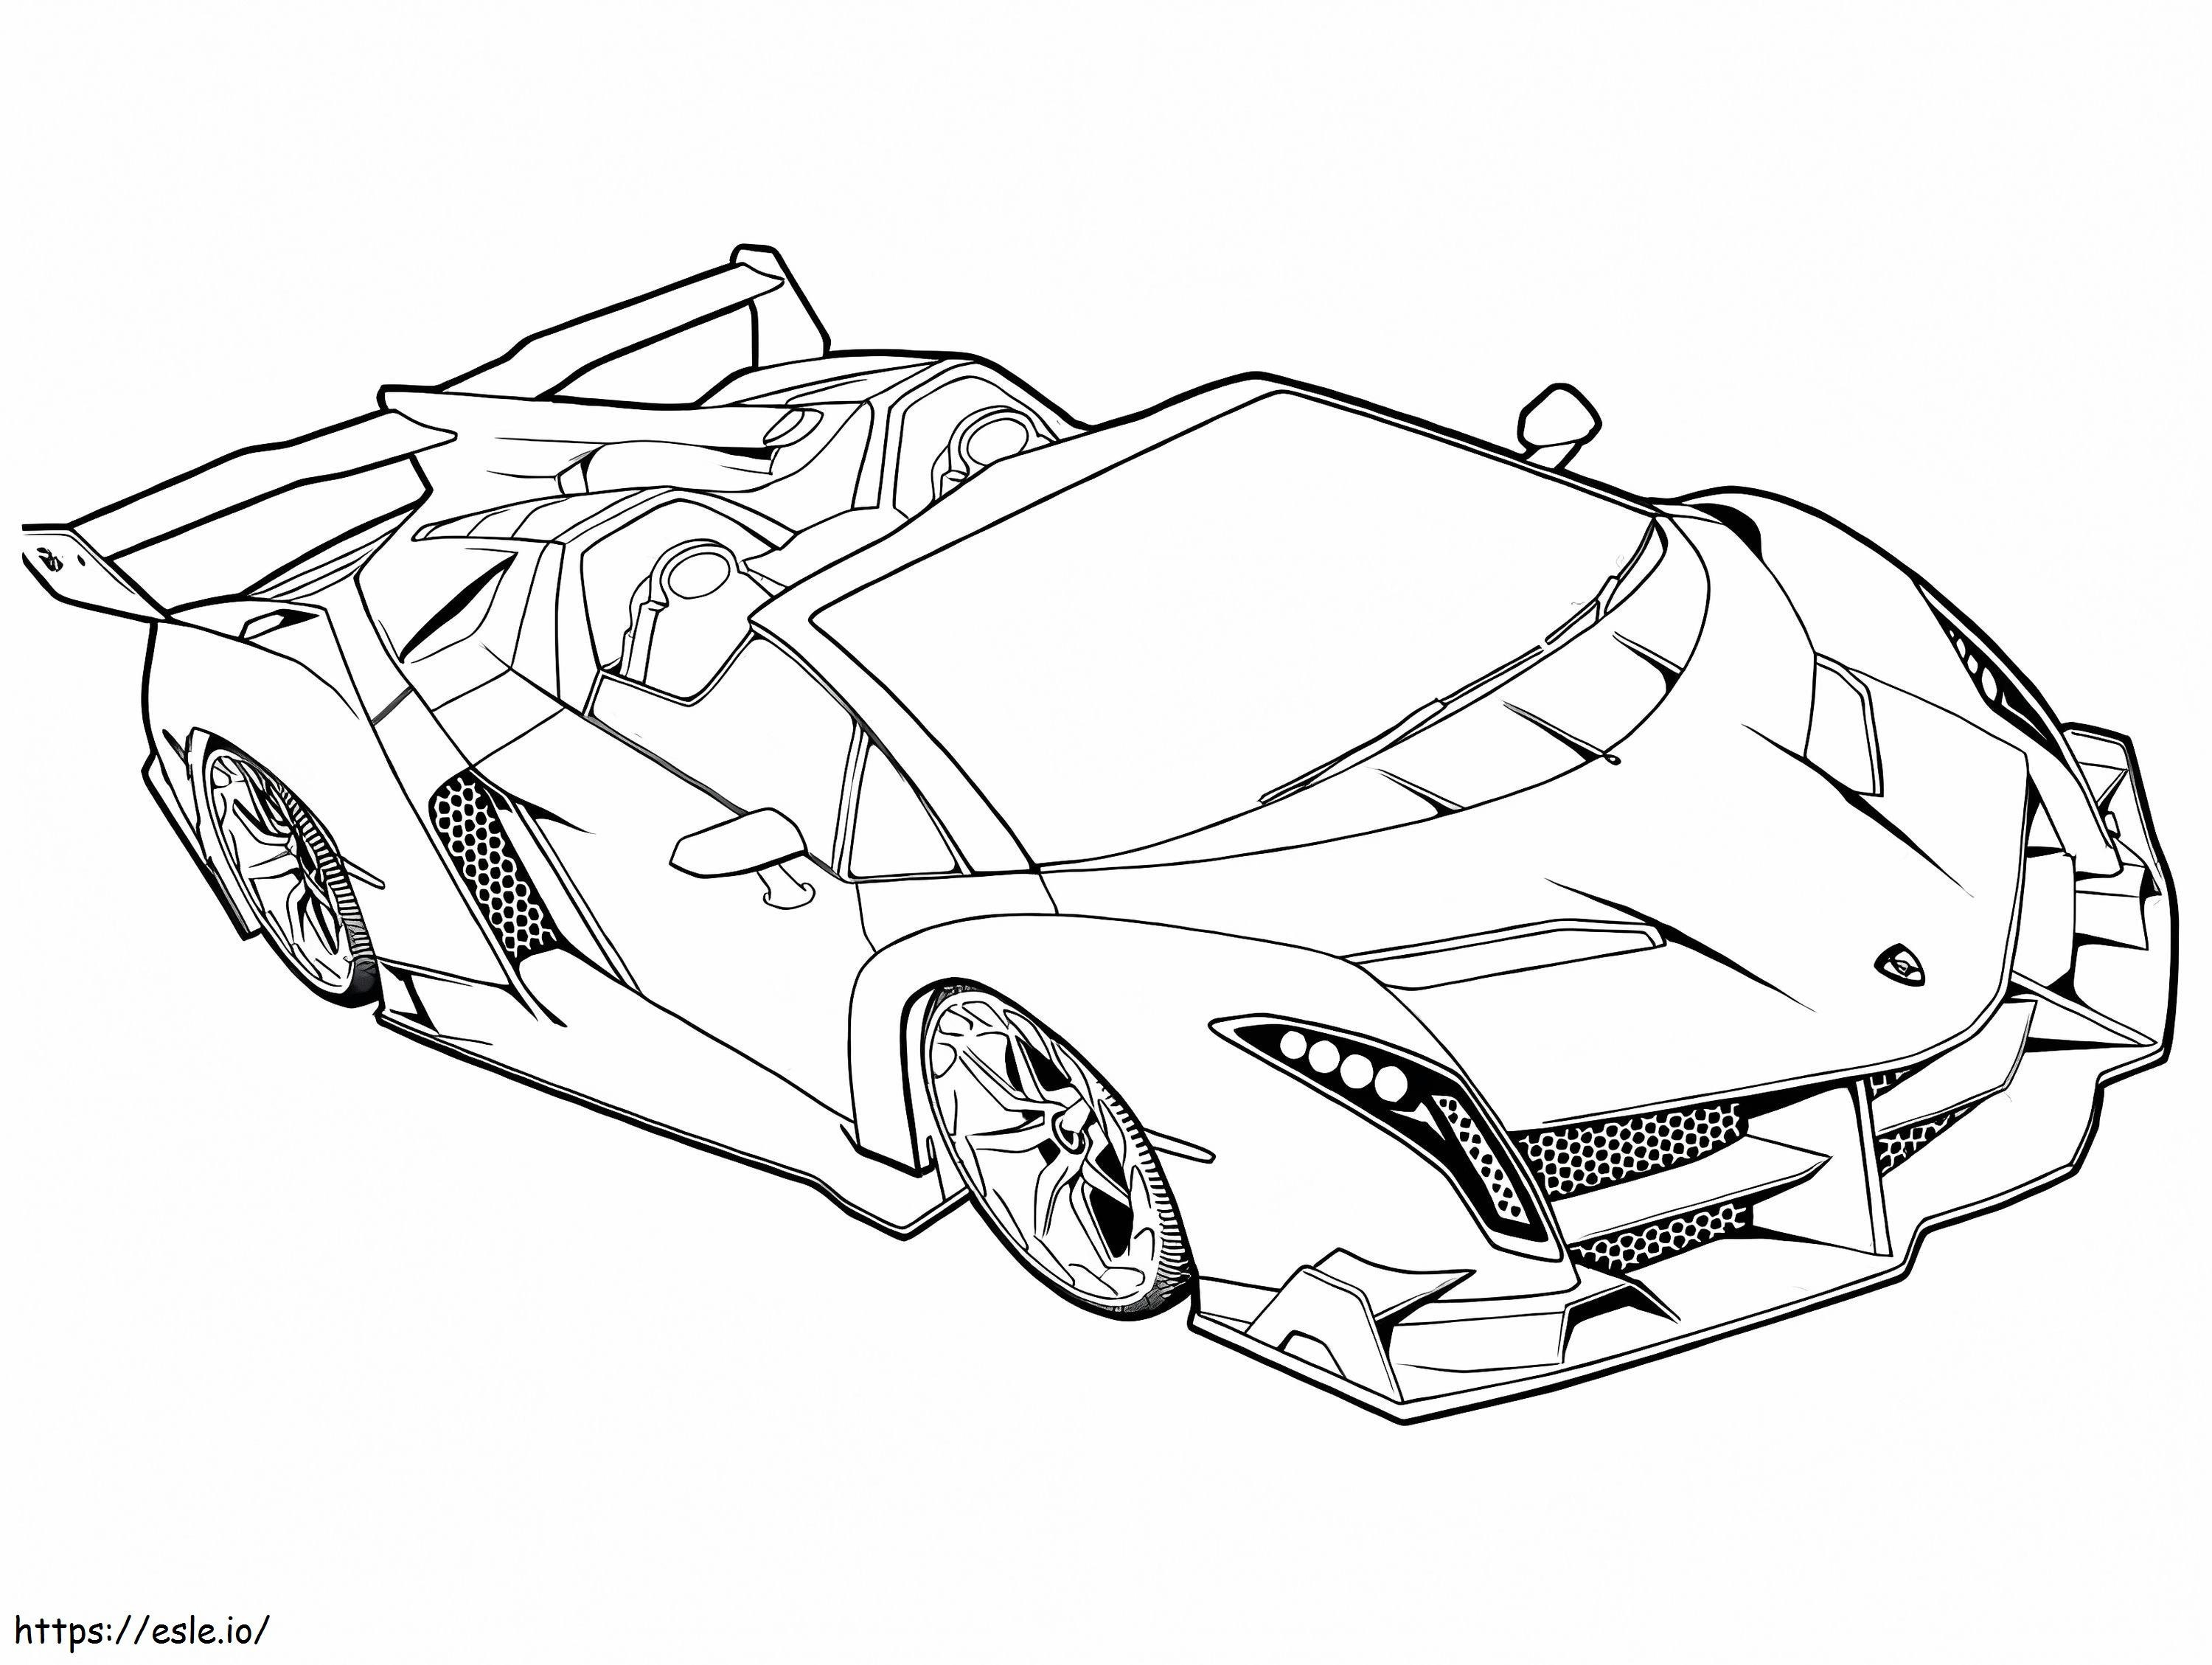 Lamborghini 19 boyama